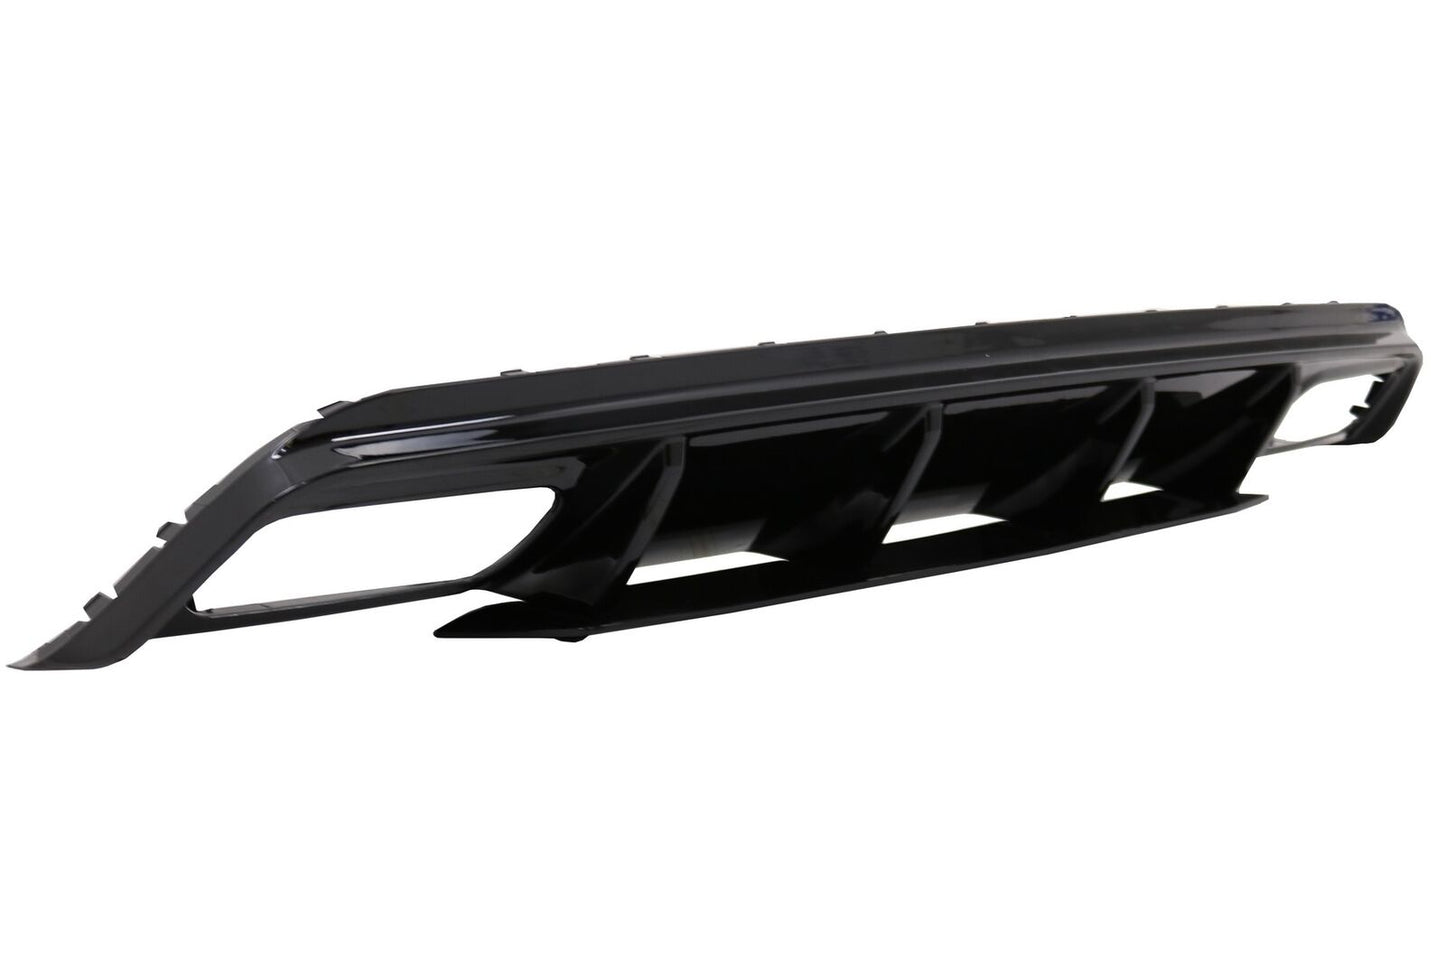 Diffusore posteriore nero per MERCEDES Classe A W176 Facelift 2012-2018 A45 Look